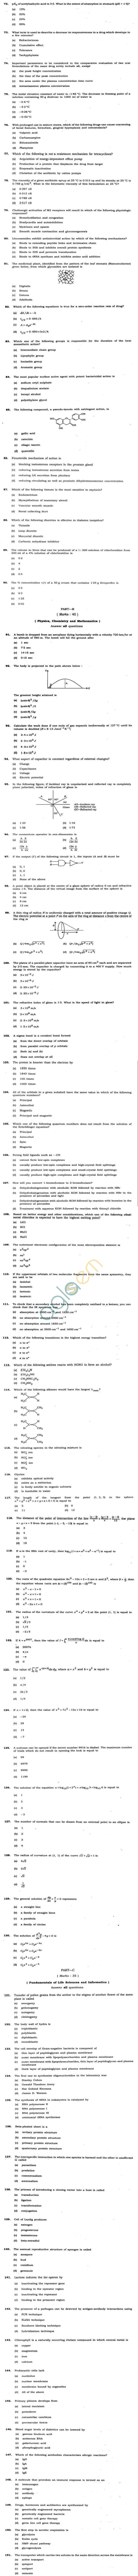 JNU CEEB Question Papers 2013 M.tech. - Biotechnology